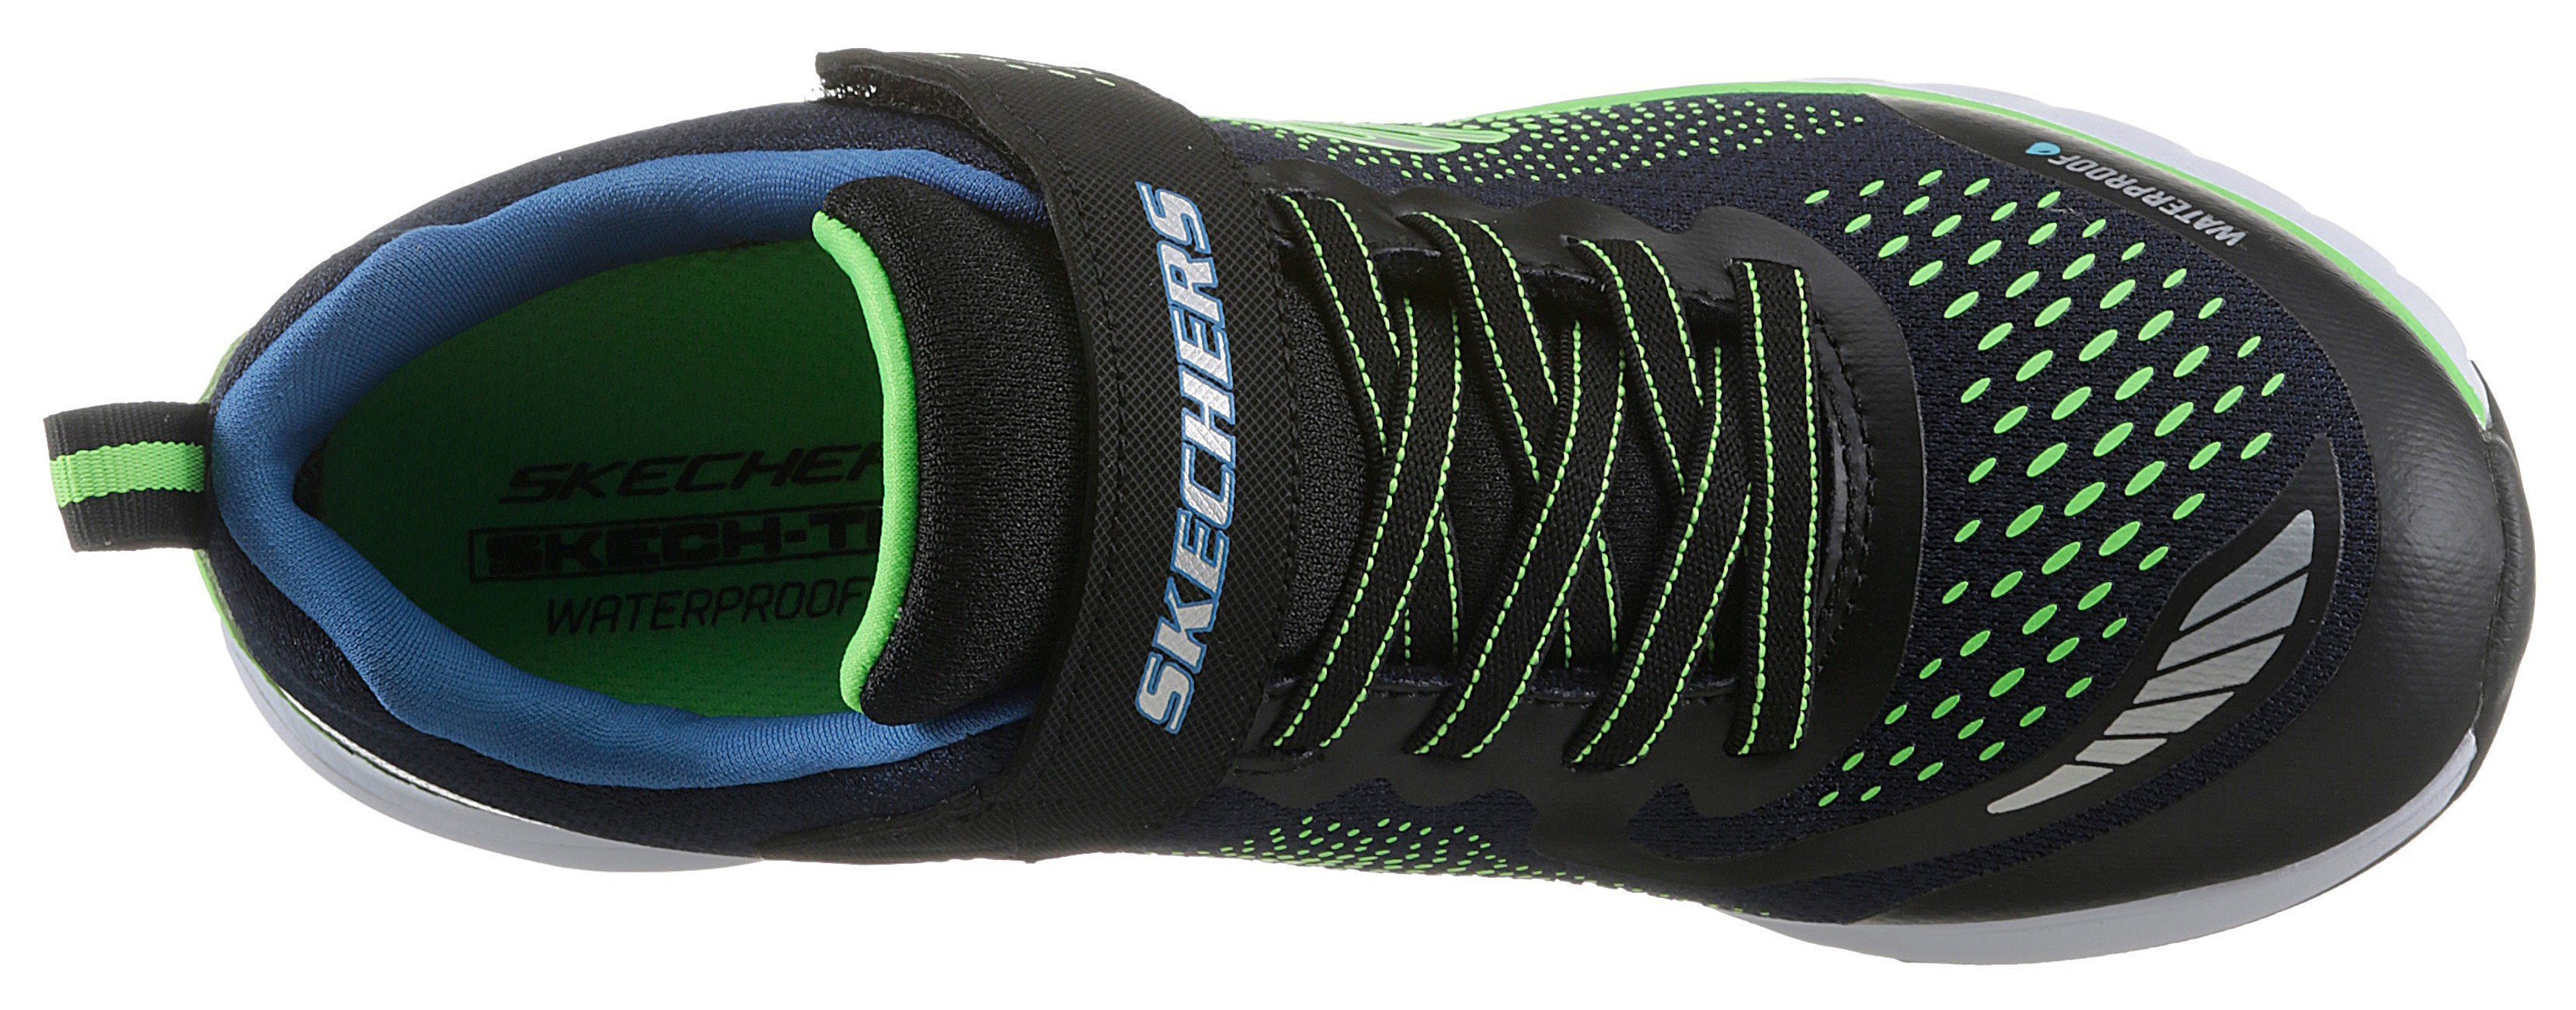 Skechers navy-schwarz Kids GROOVE mit Waterproof-Ausstattung Sneaker ULTRA